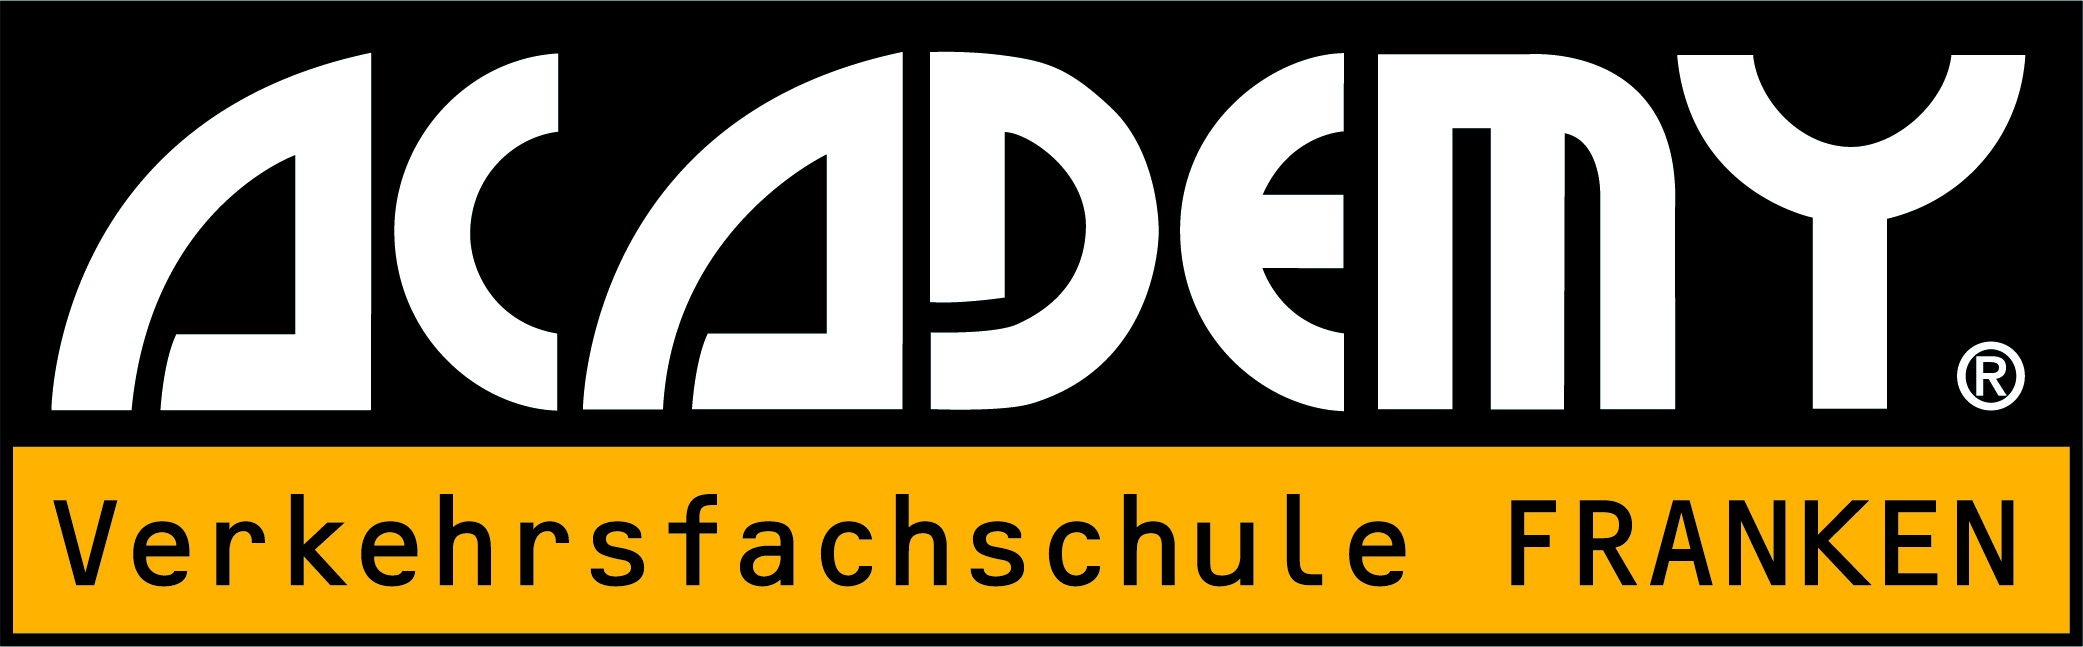 ACADEMY Verkehrsfachschule FRANKEN GmbH